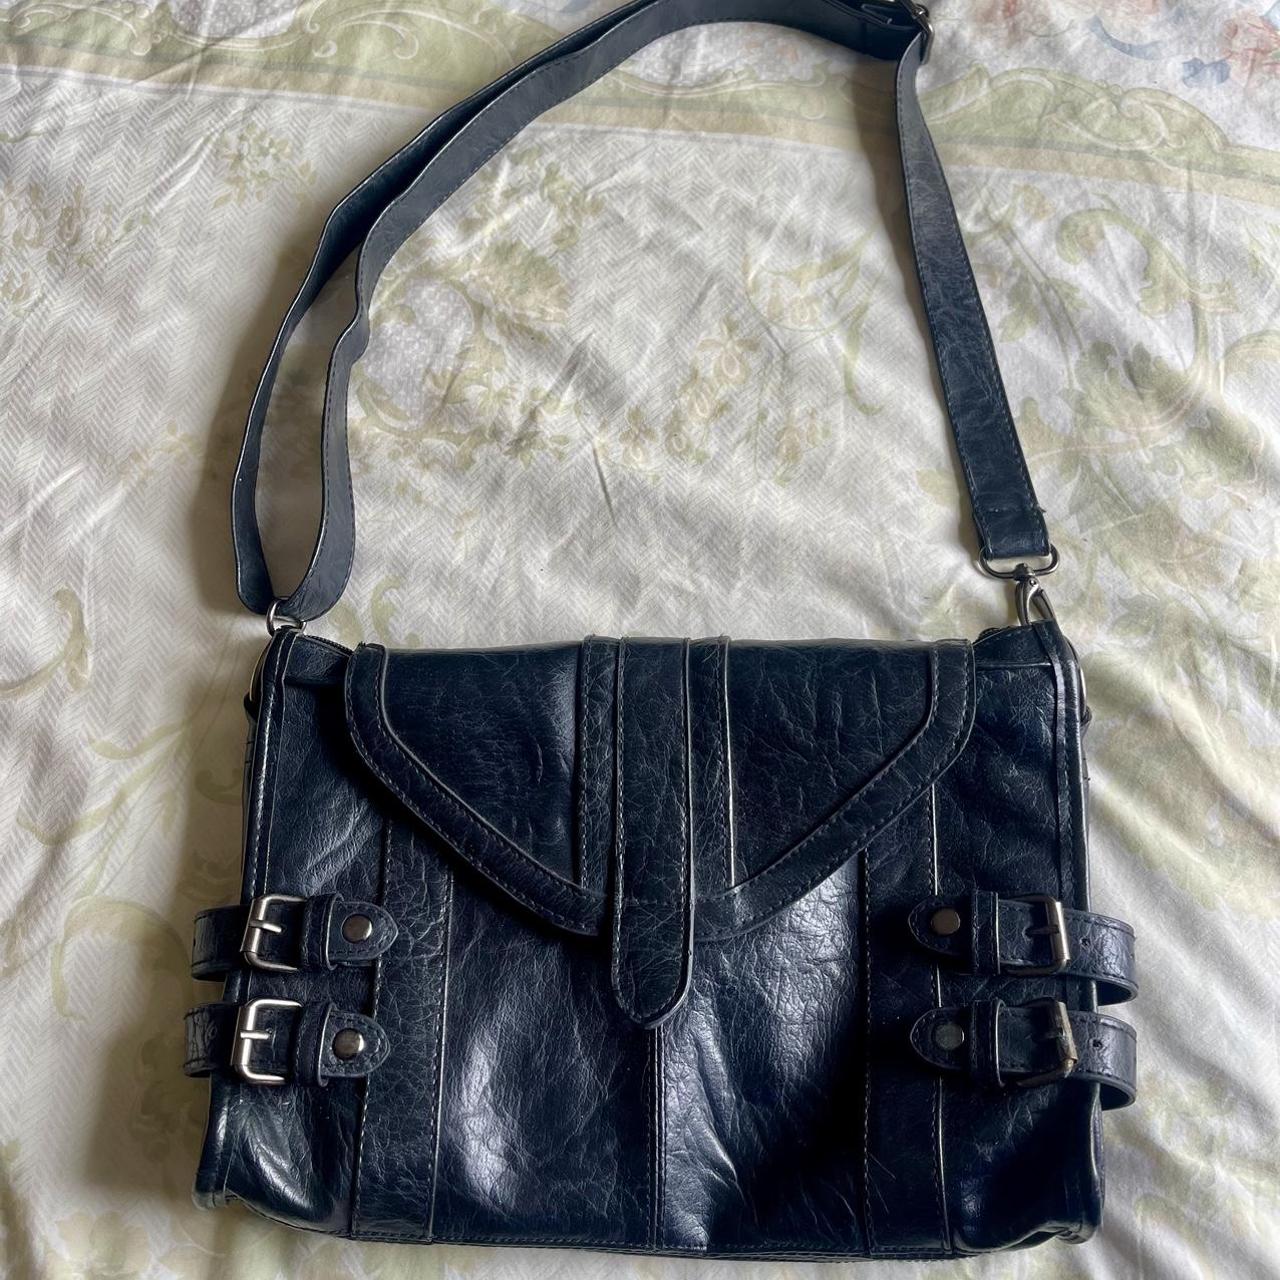 Vintage black leather BlueBird handbag 👜🎀 $20 - Depop